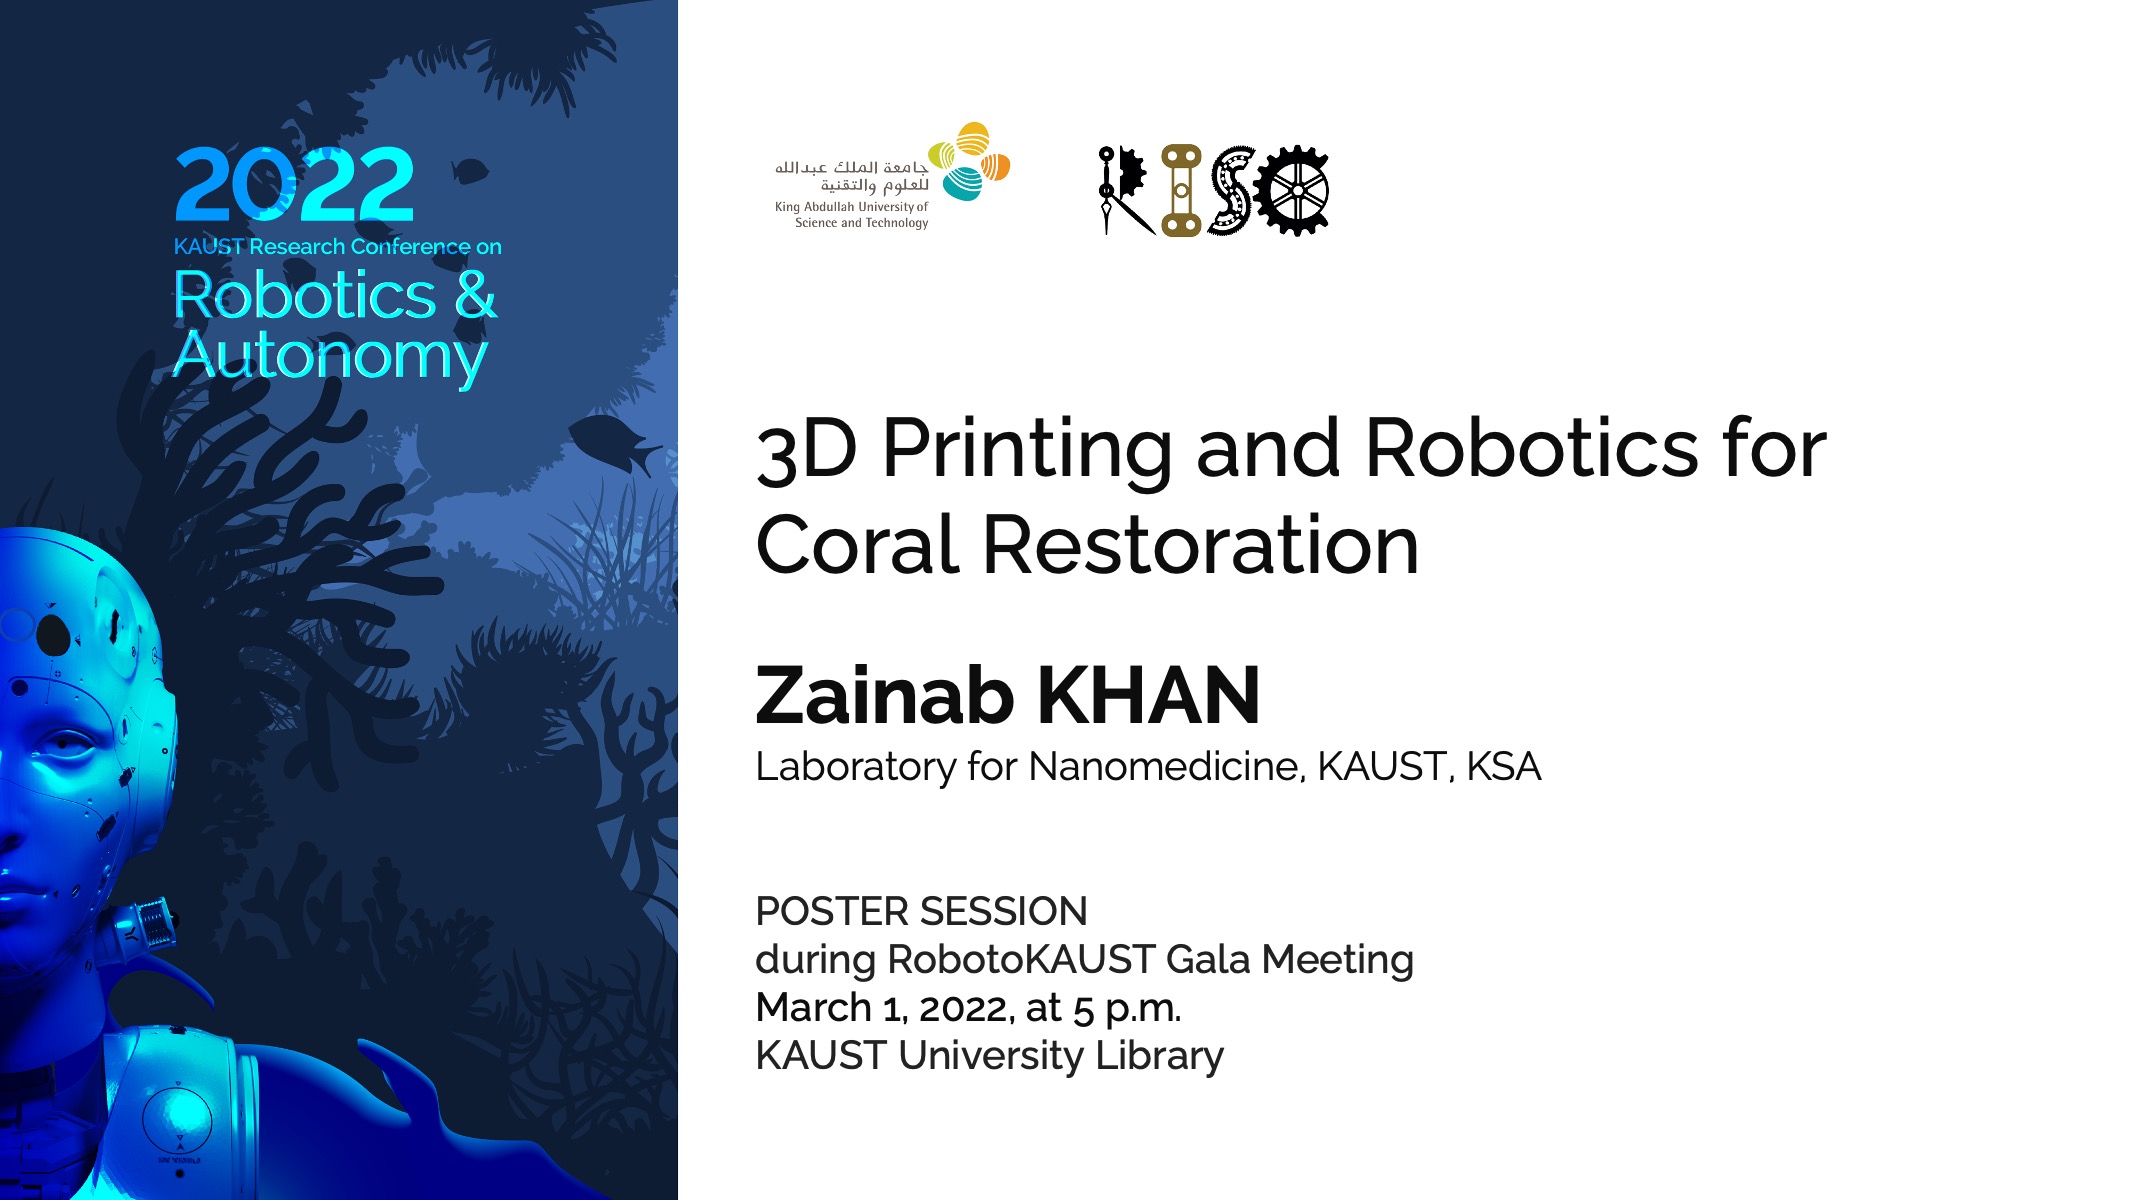 RobotoKAUST 2022 Zainab Khan